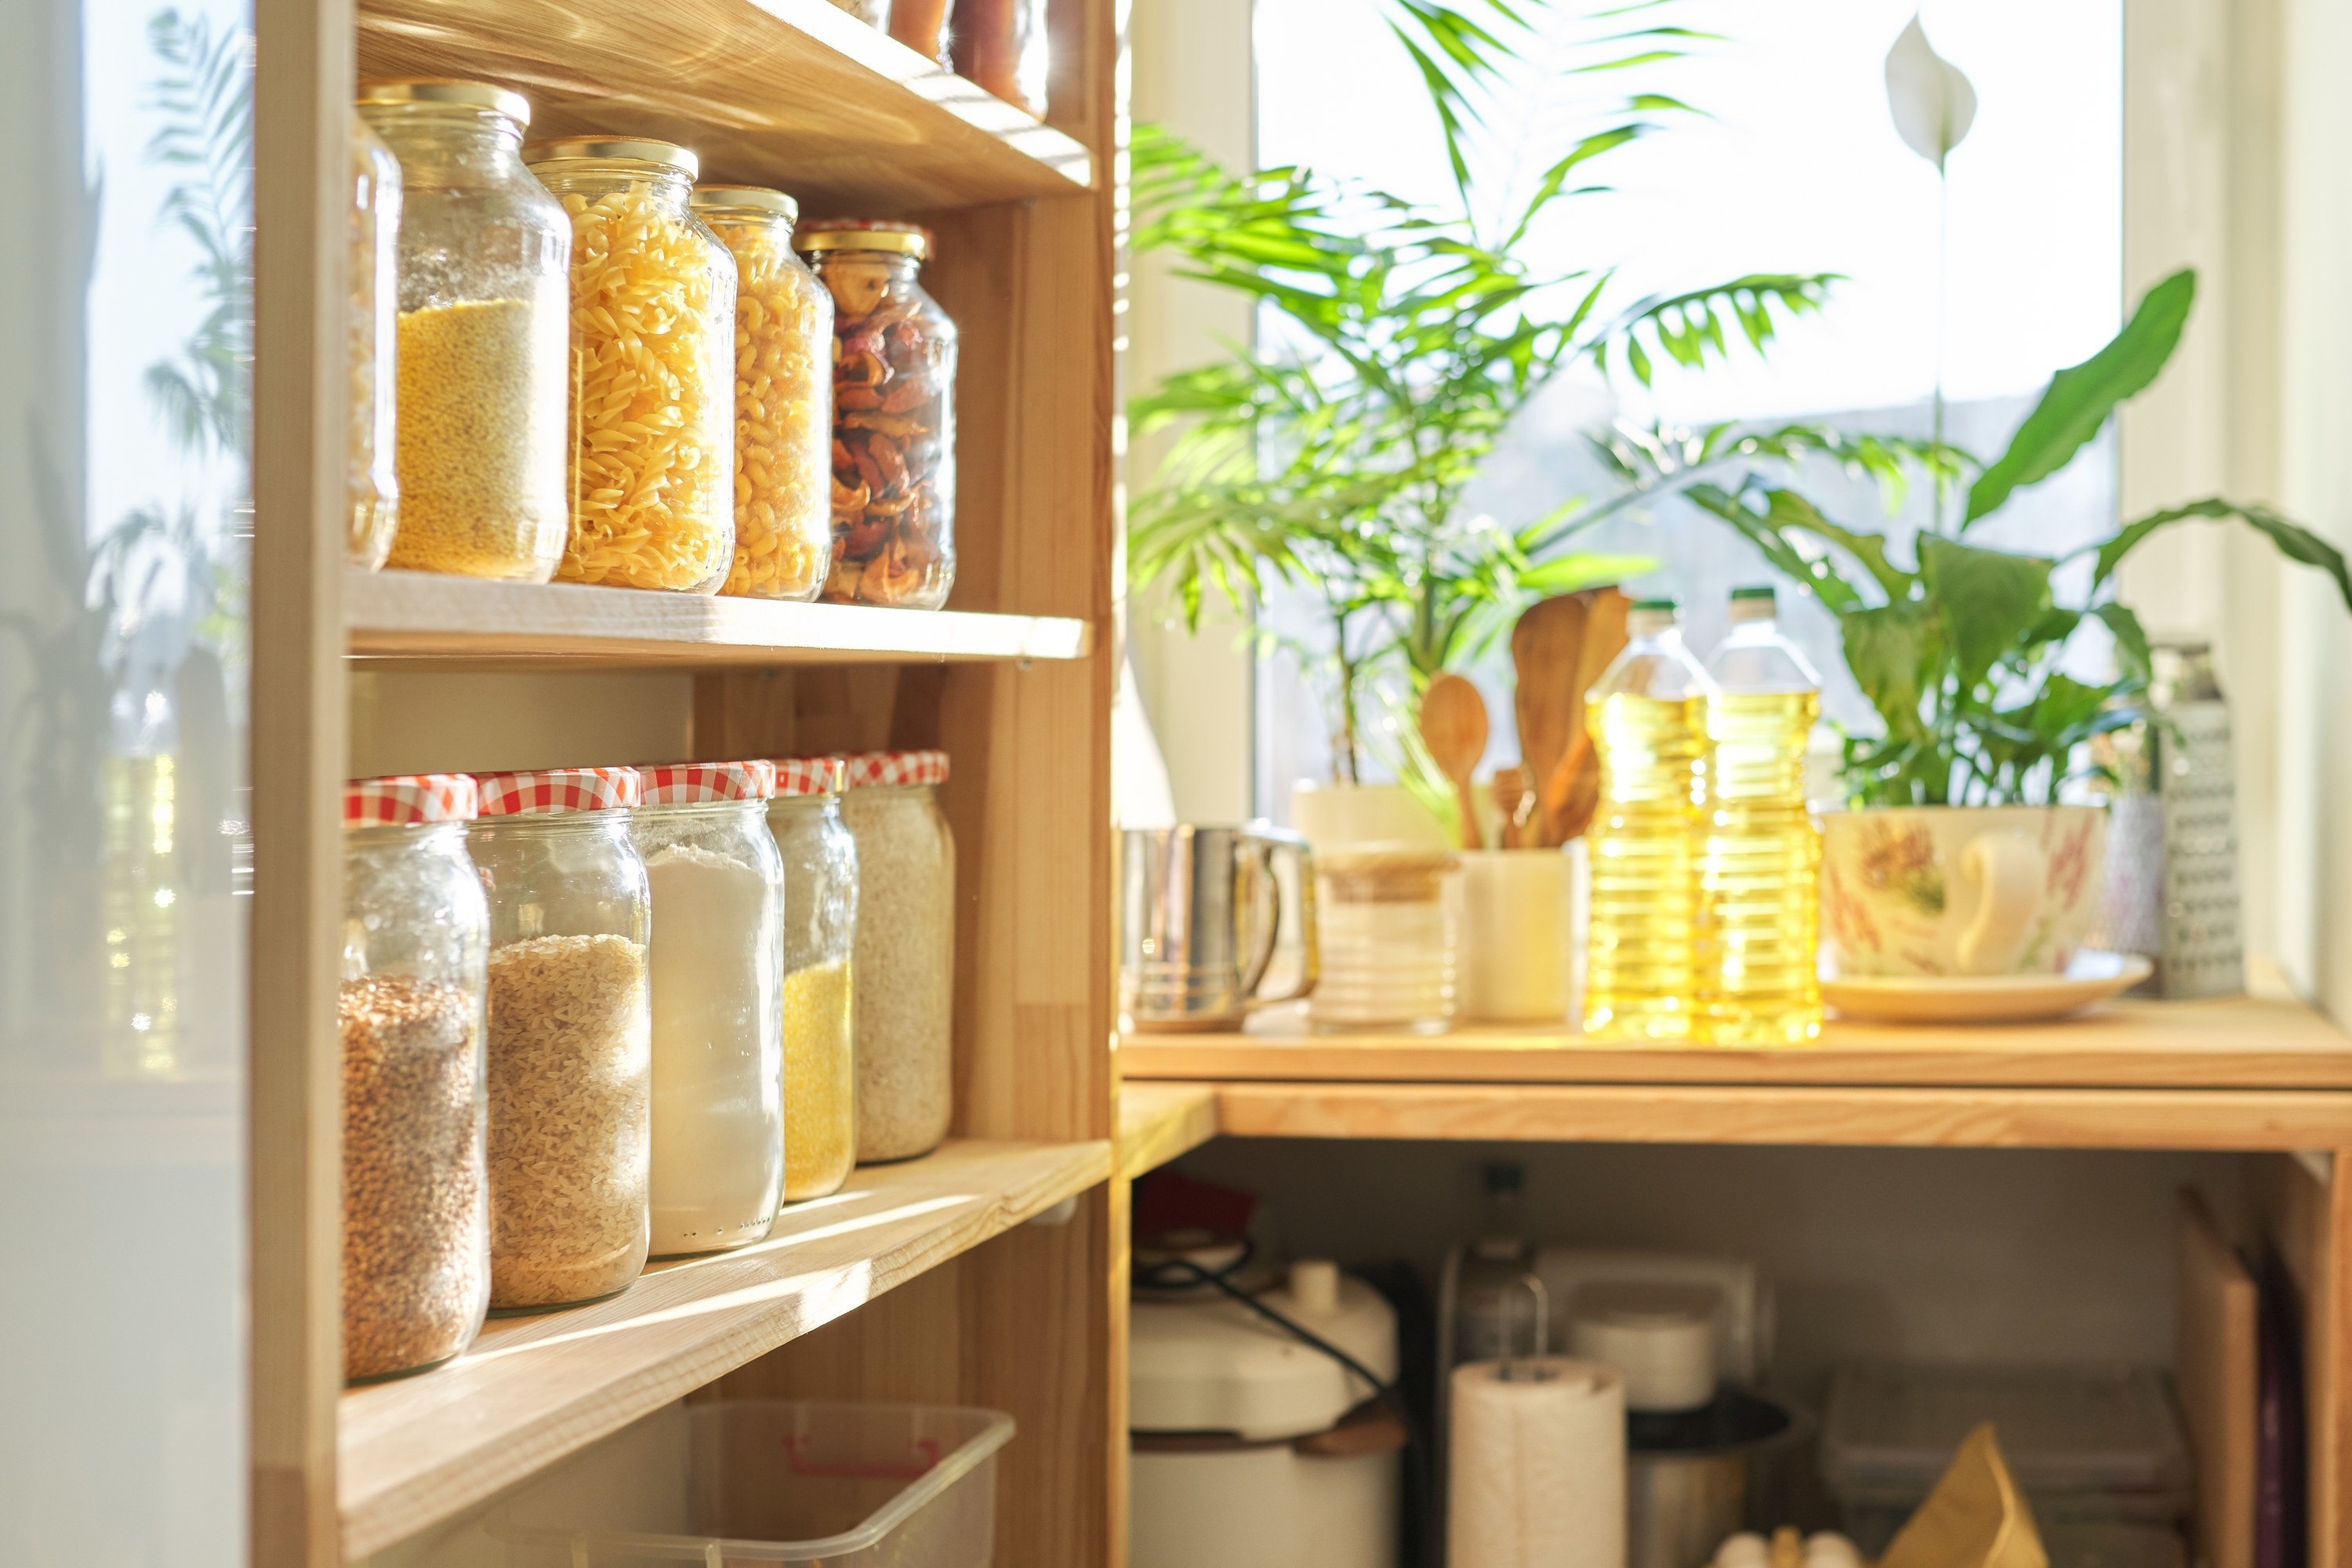 Pantry shelves stocked with food storage jars